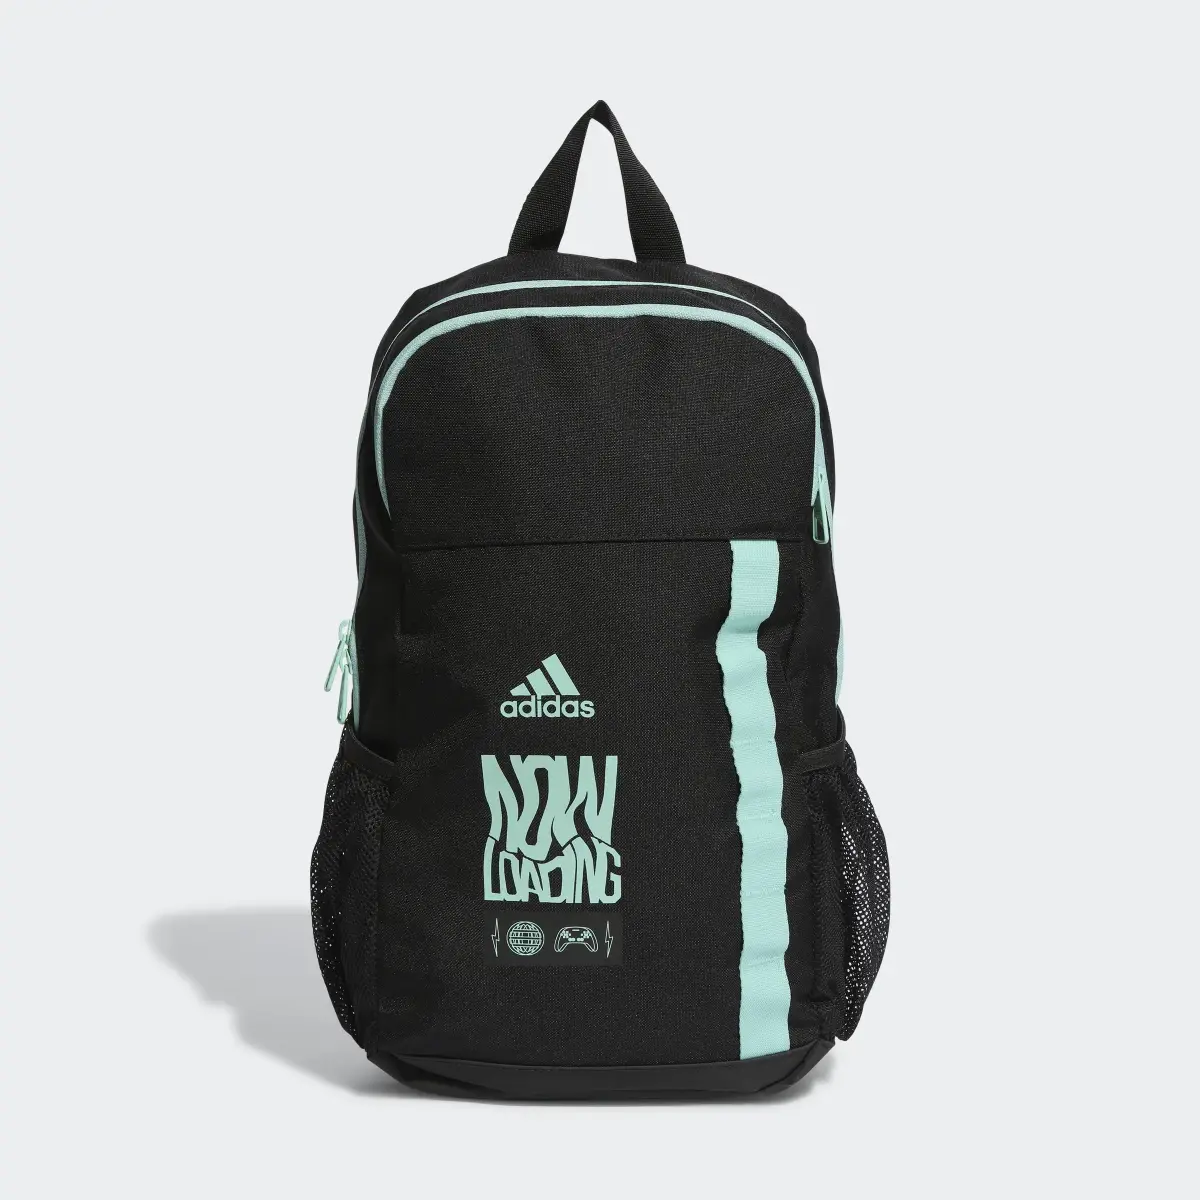 Adidas ARKD3 Backpack. 2